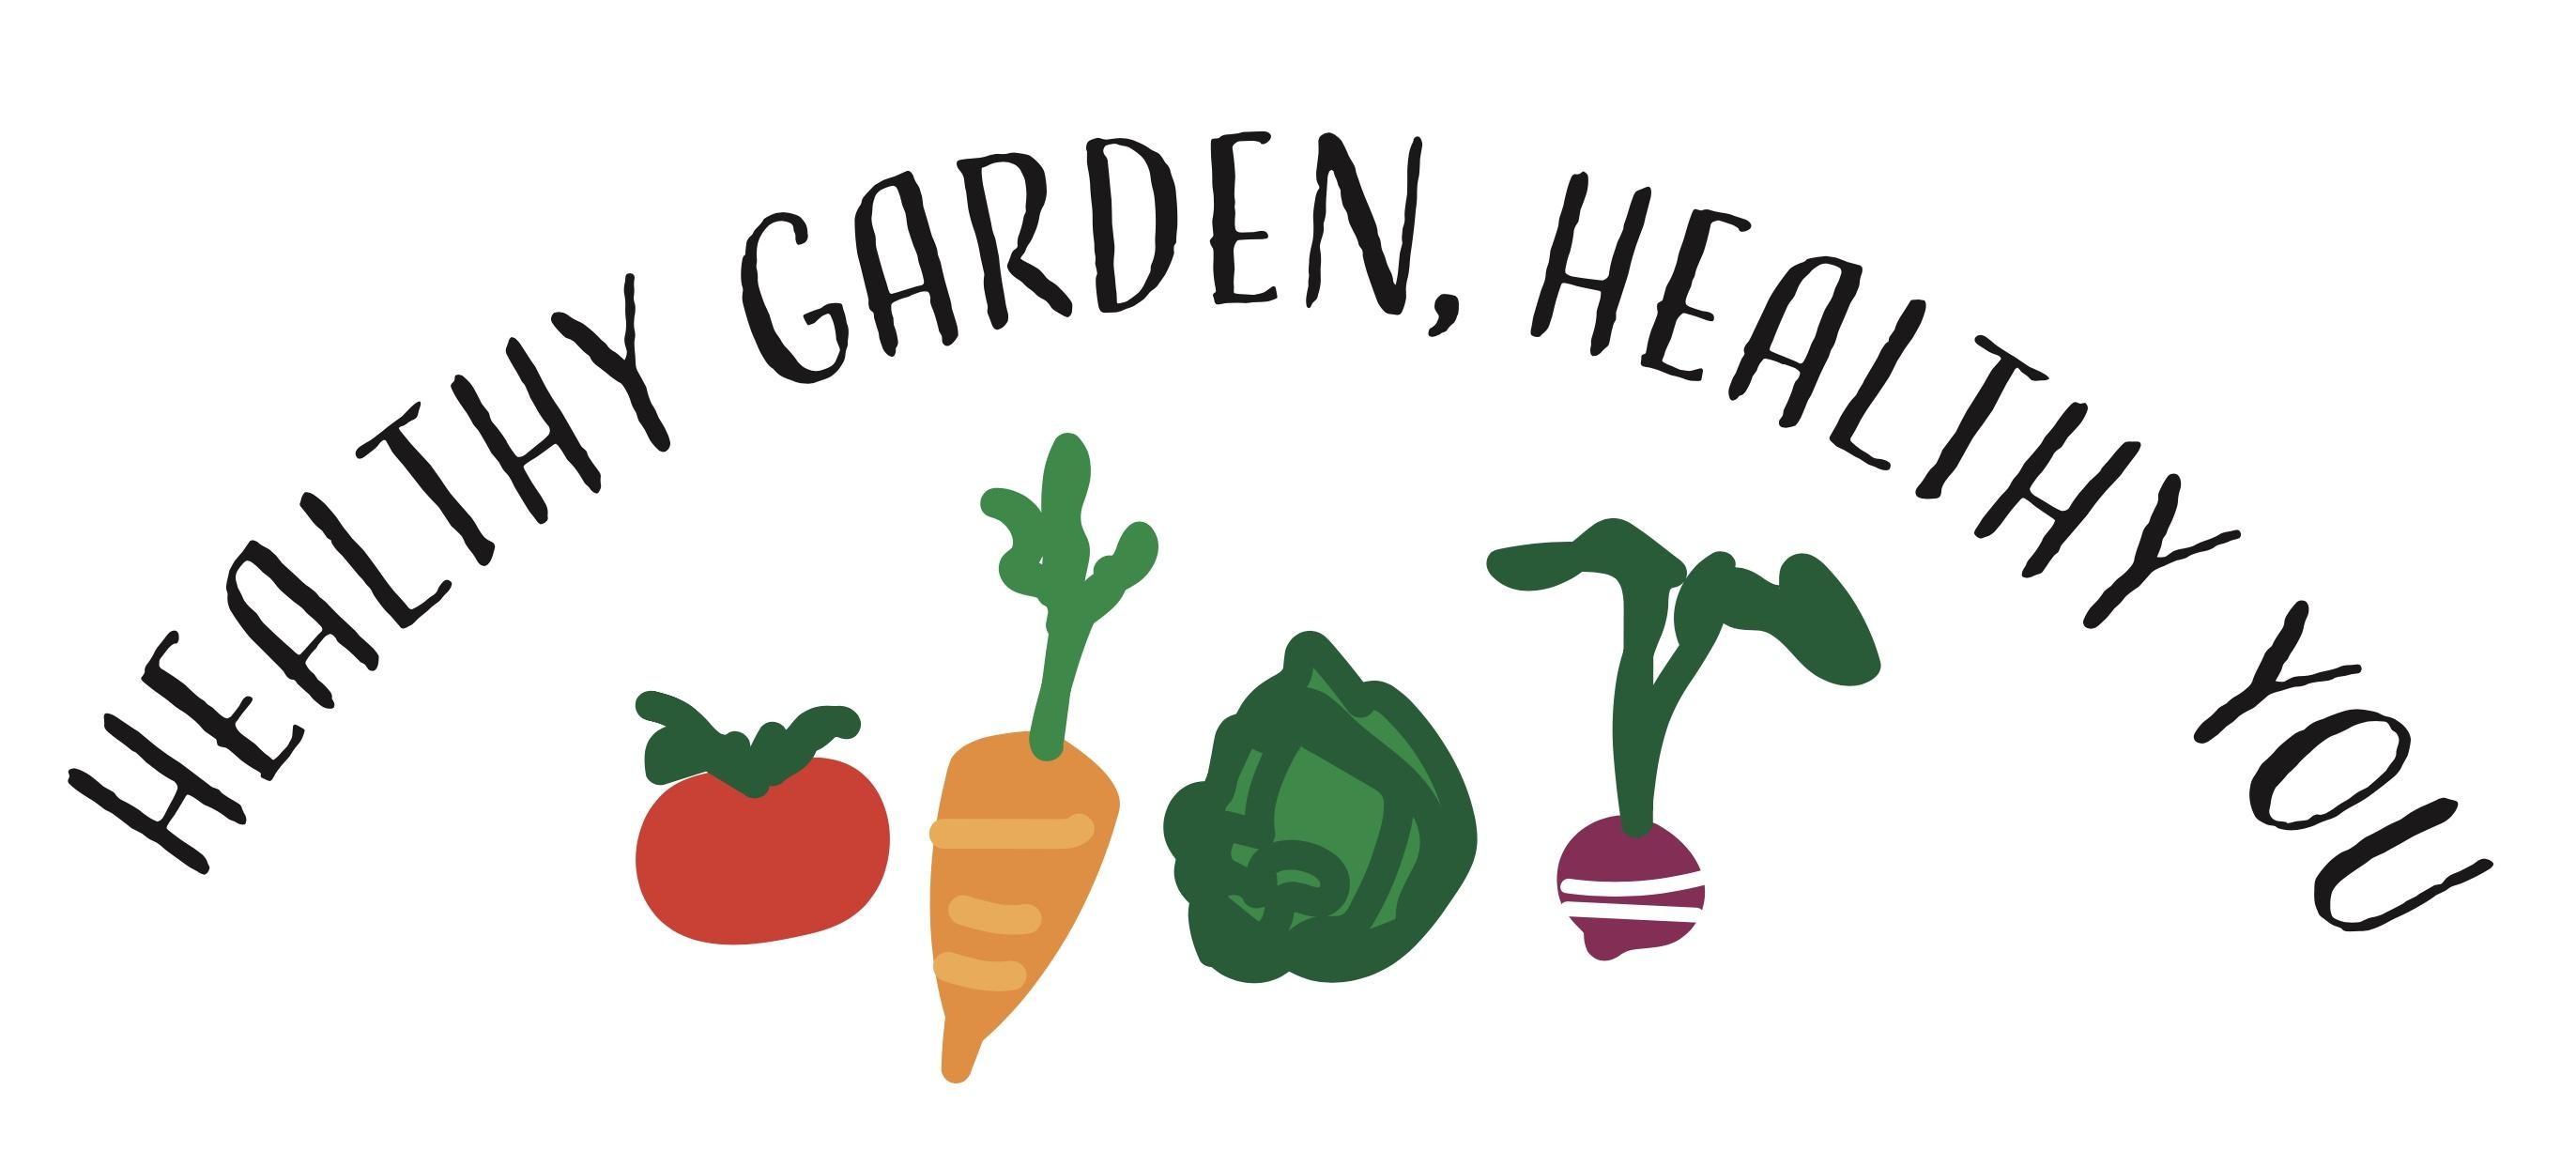 healthy garden healthy you logo